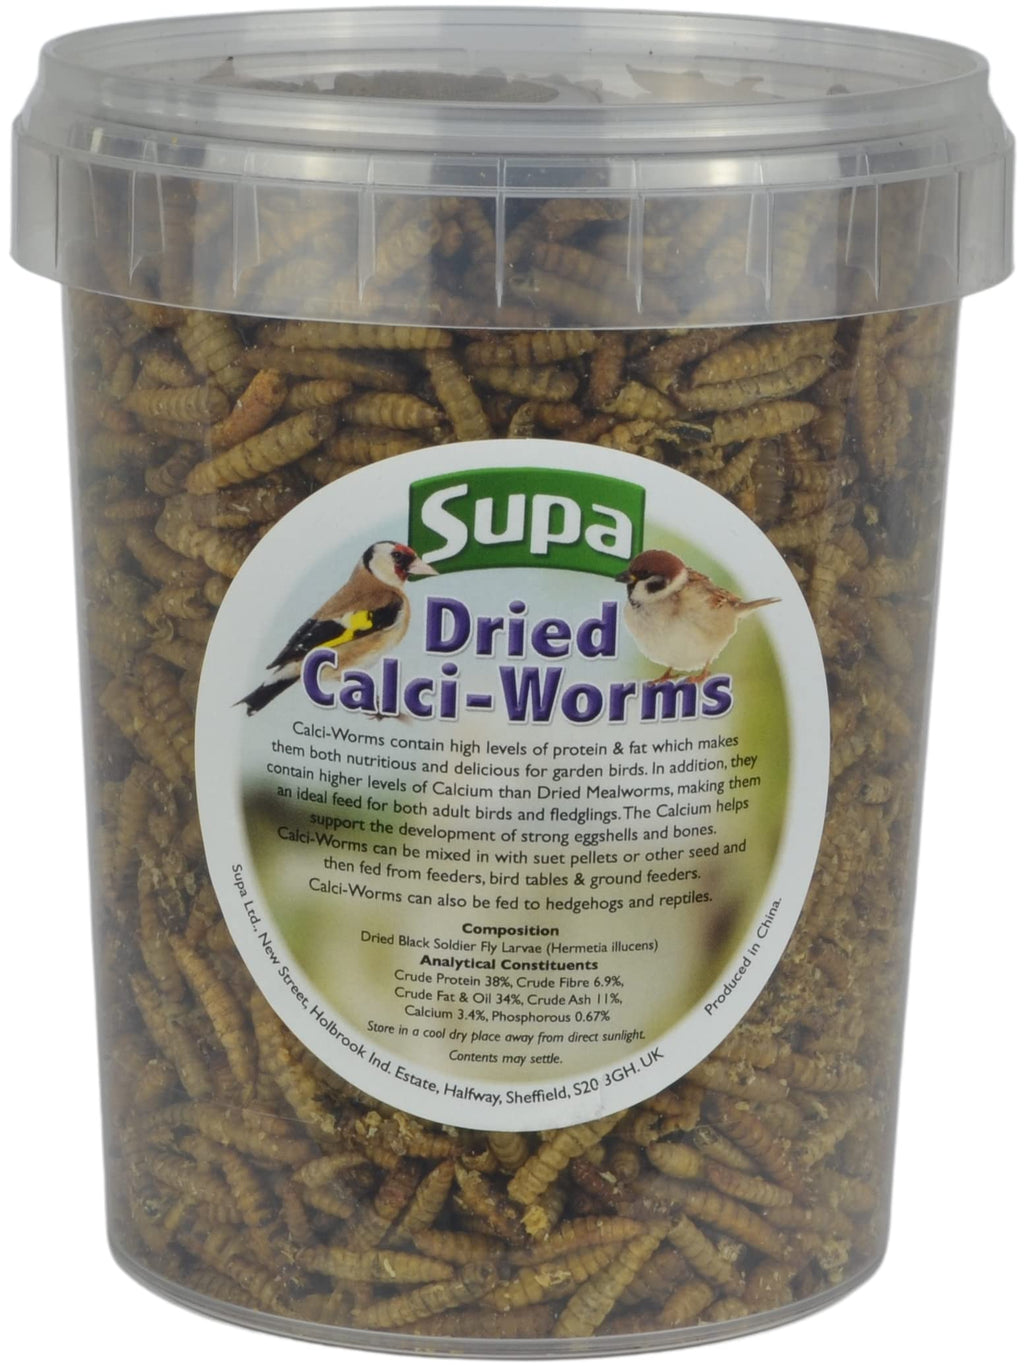 Supa Dried Calci Worms for Wild Birds, 1 Litre Bucket, High Energy Protein Rich Treat For Garden Birds, Attract More Birds To Your Garden, Quality Wild Bird Food - PawsPlanet Australia